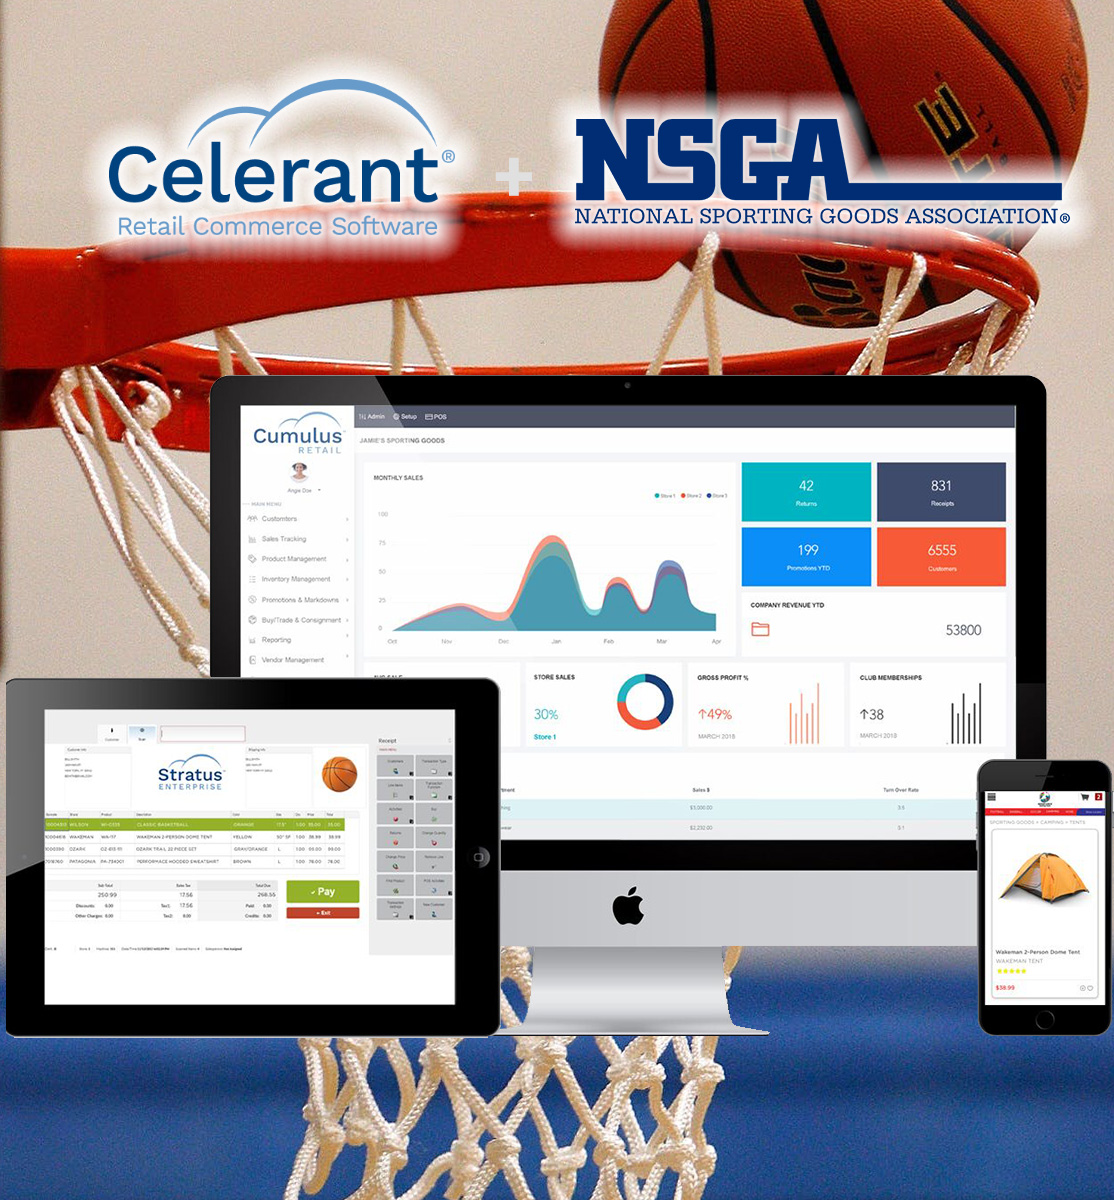 Celerant's software can benefit all NSGA members